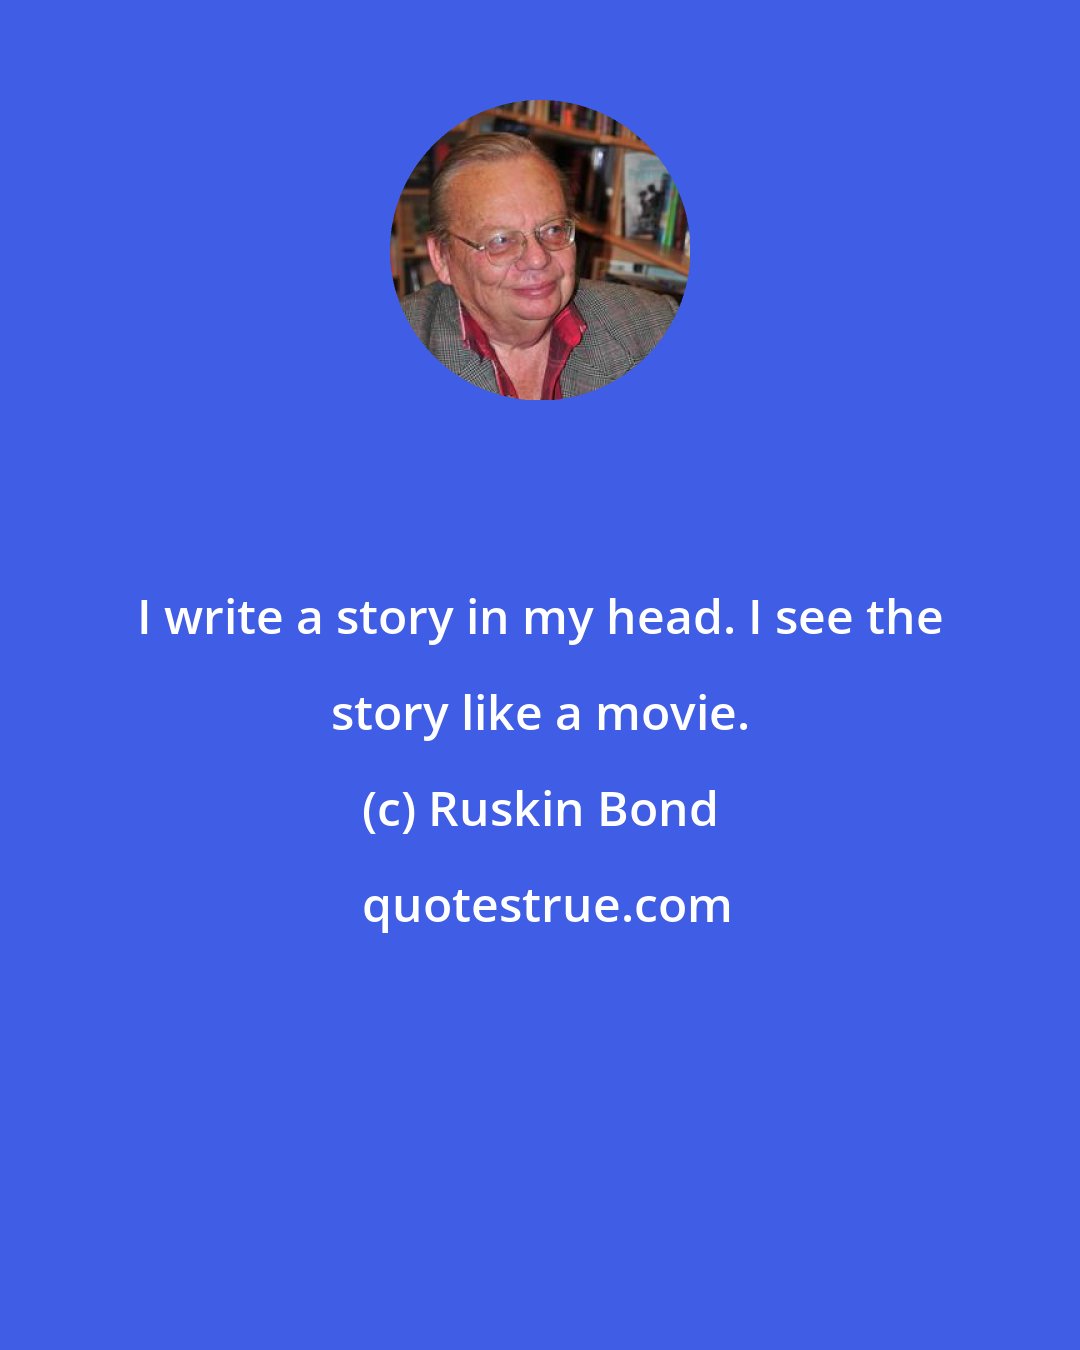 Ruskin Bond: I write a story in my head. I see the story like a movie.